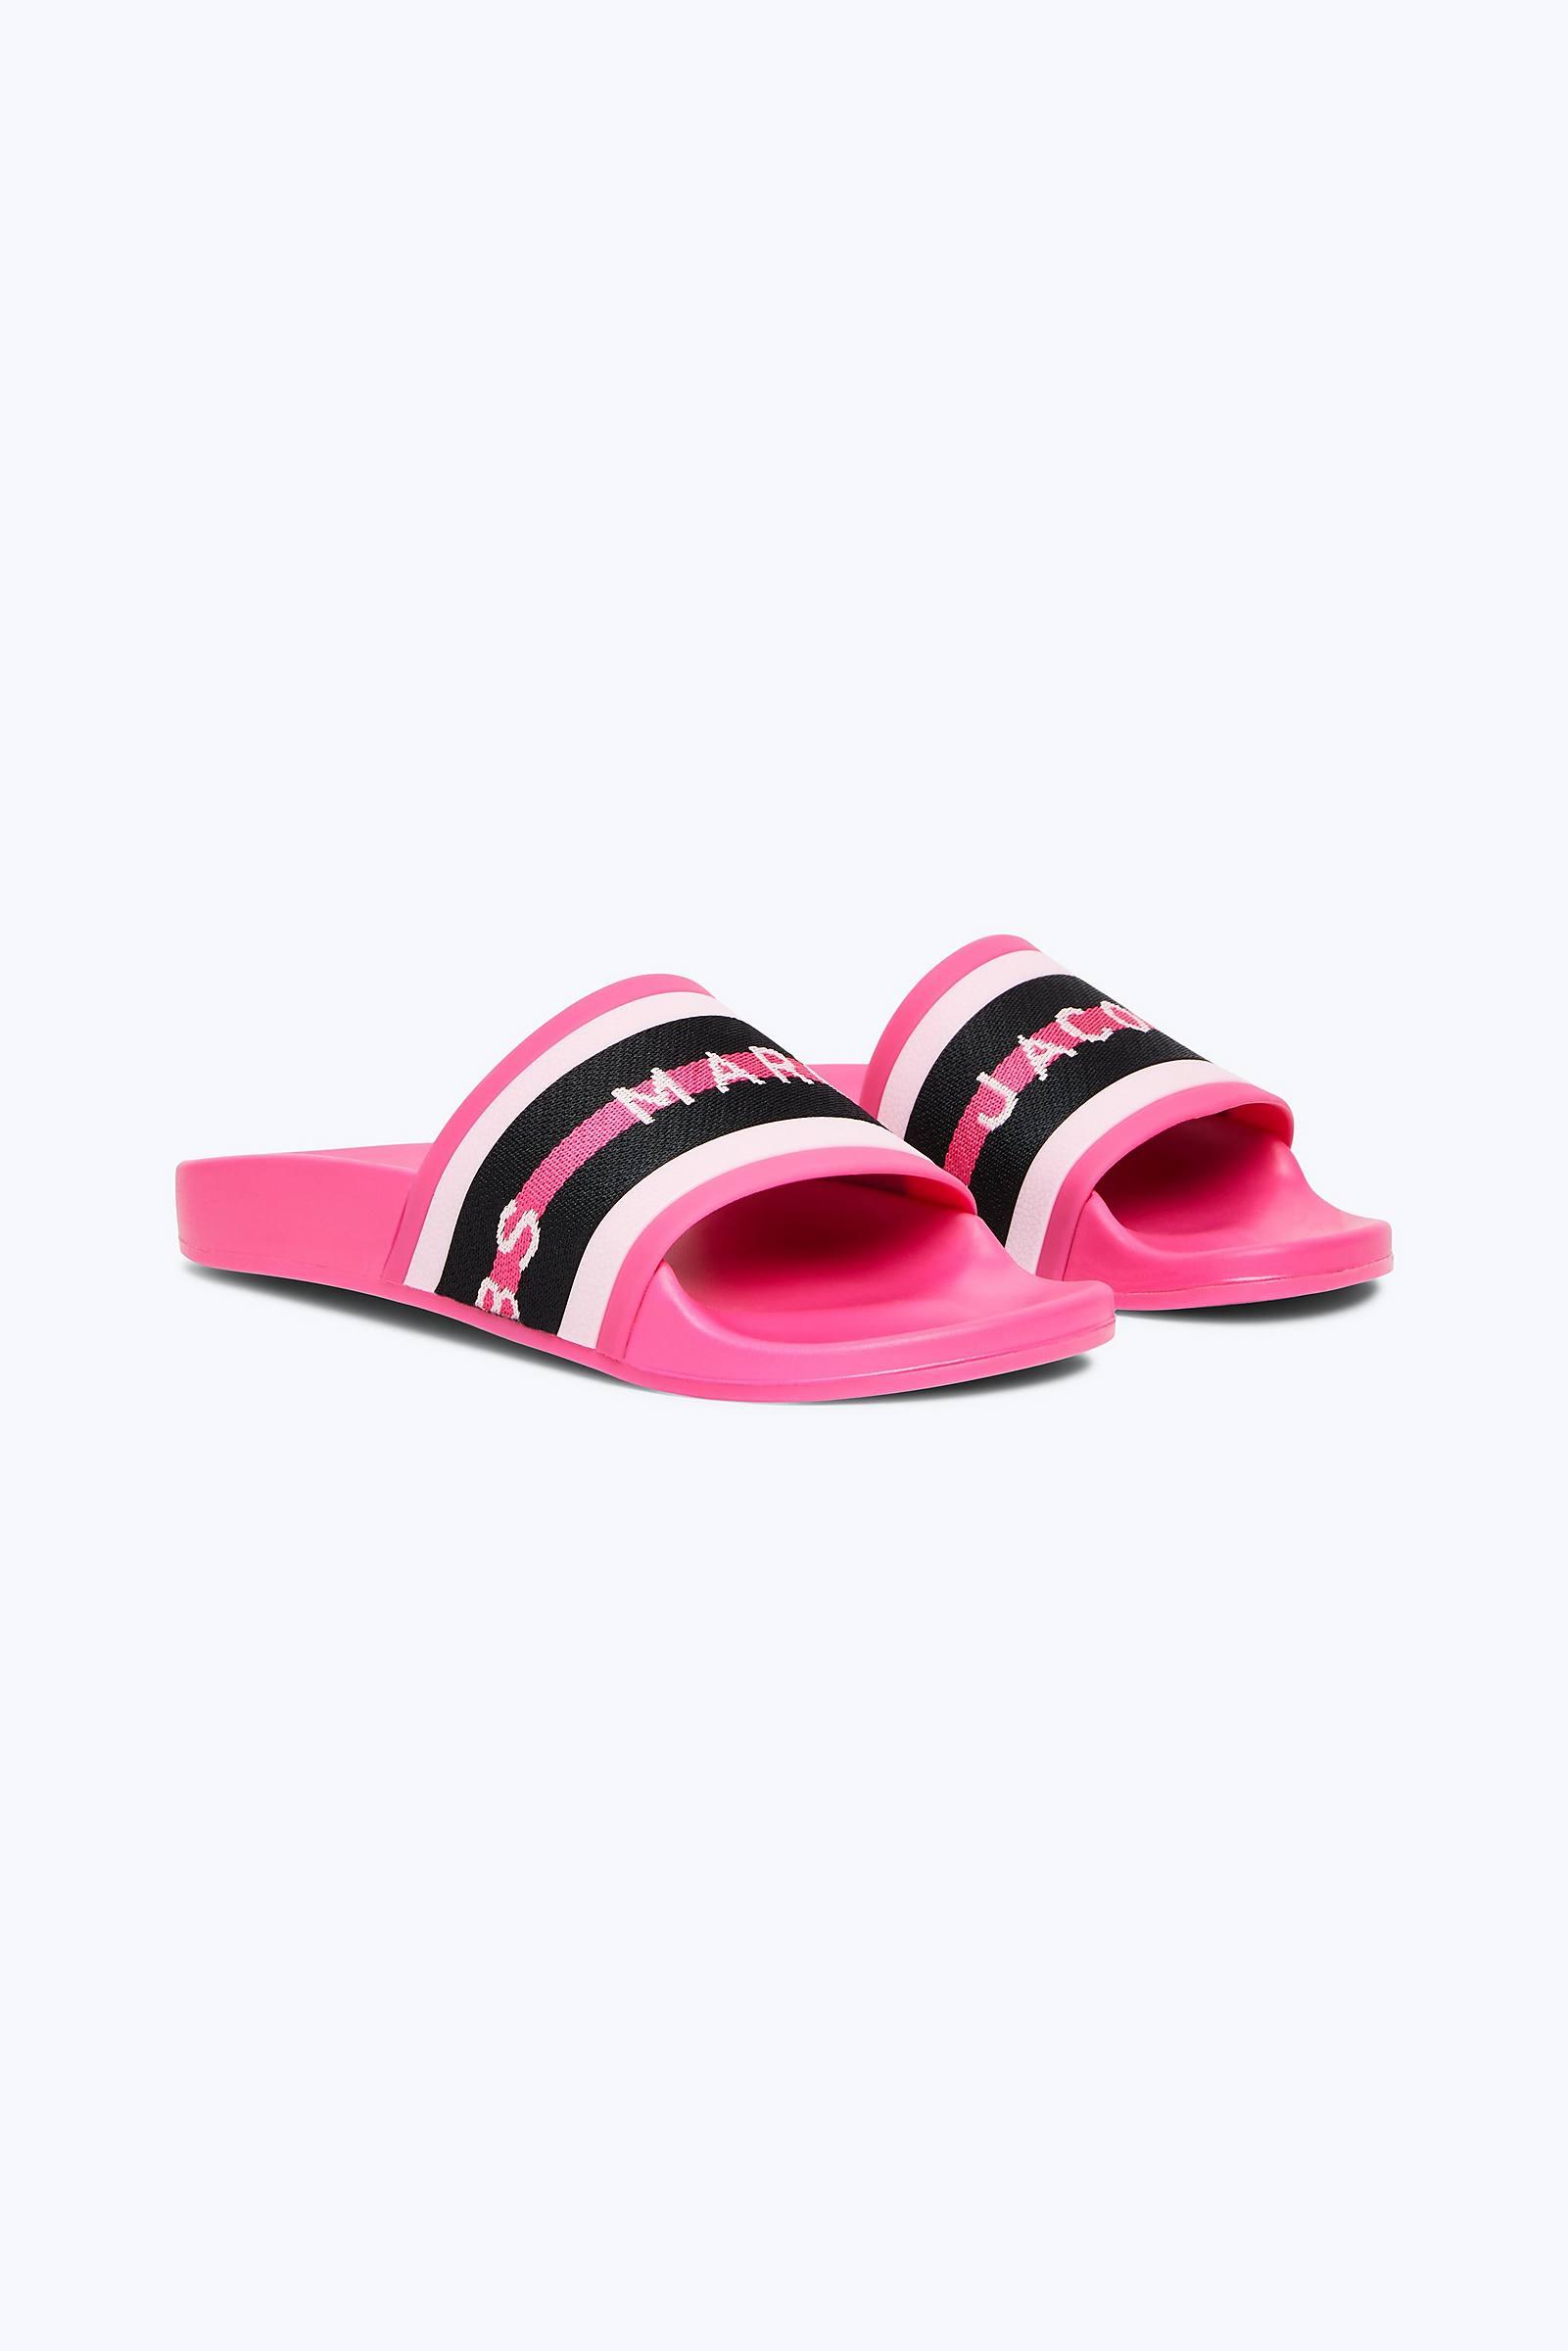 Marc Jacobs Logo Sport Slide Sandal in Pink - Lyst